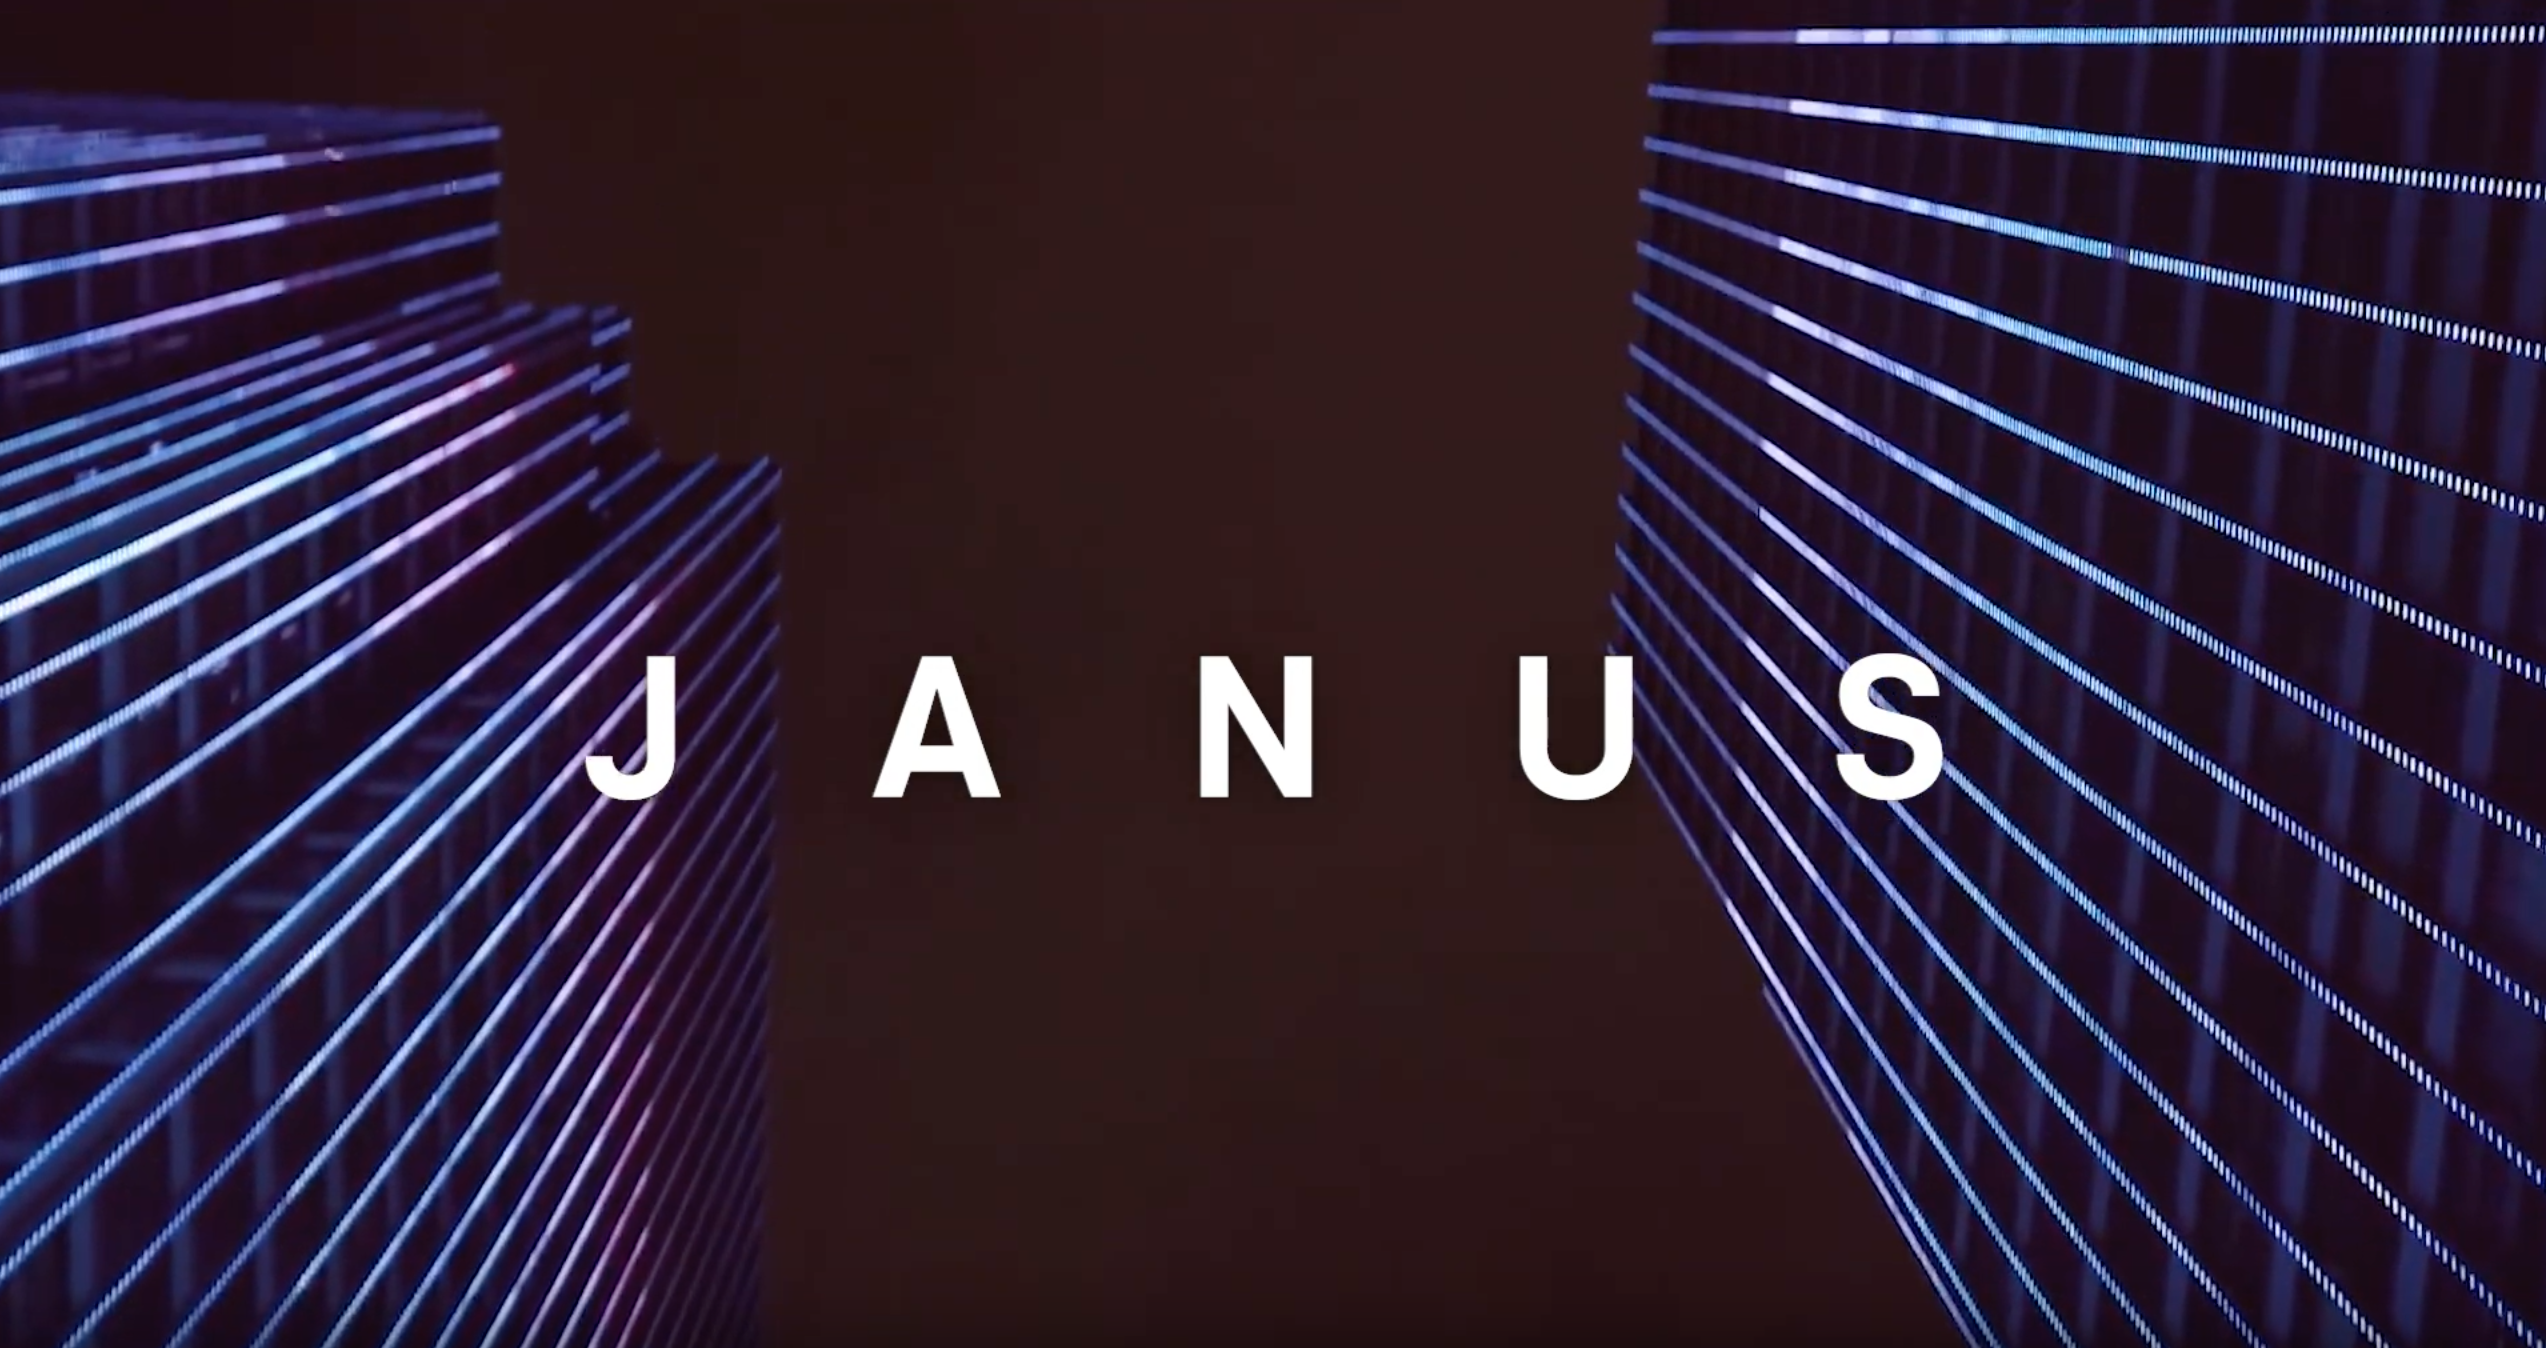 Janus (Official Video)